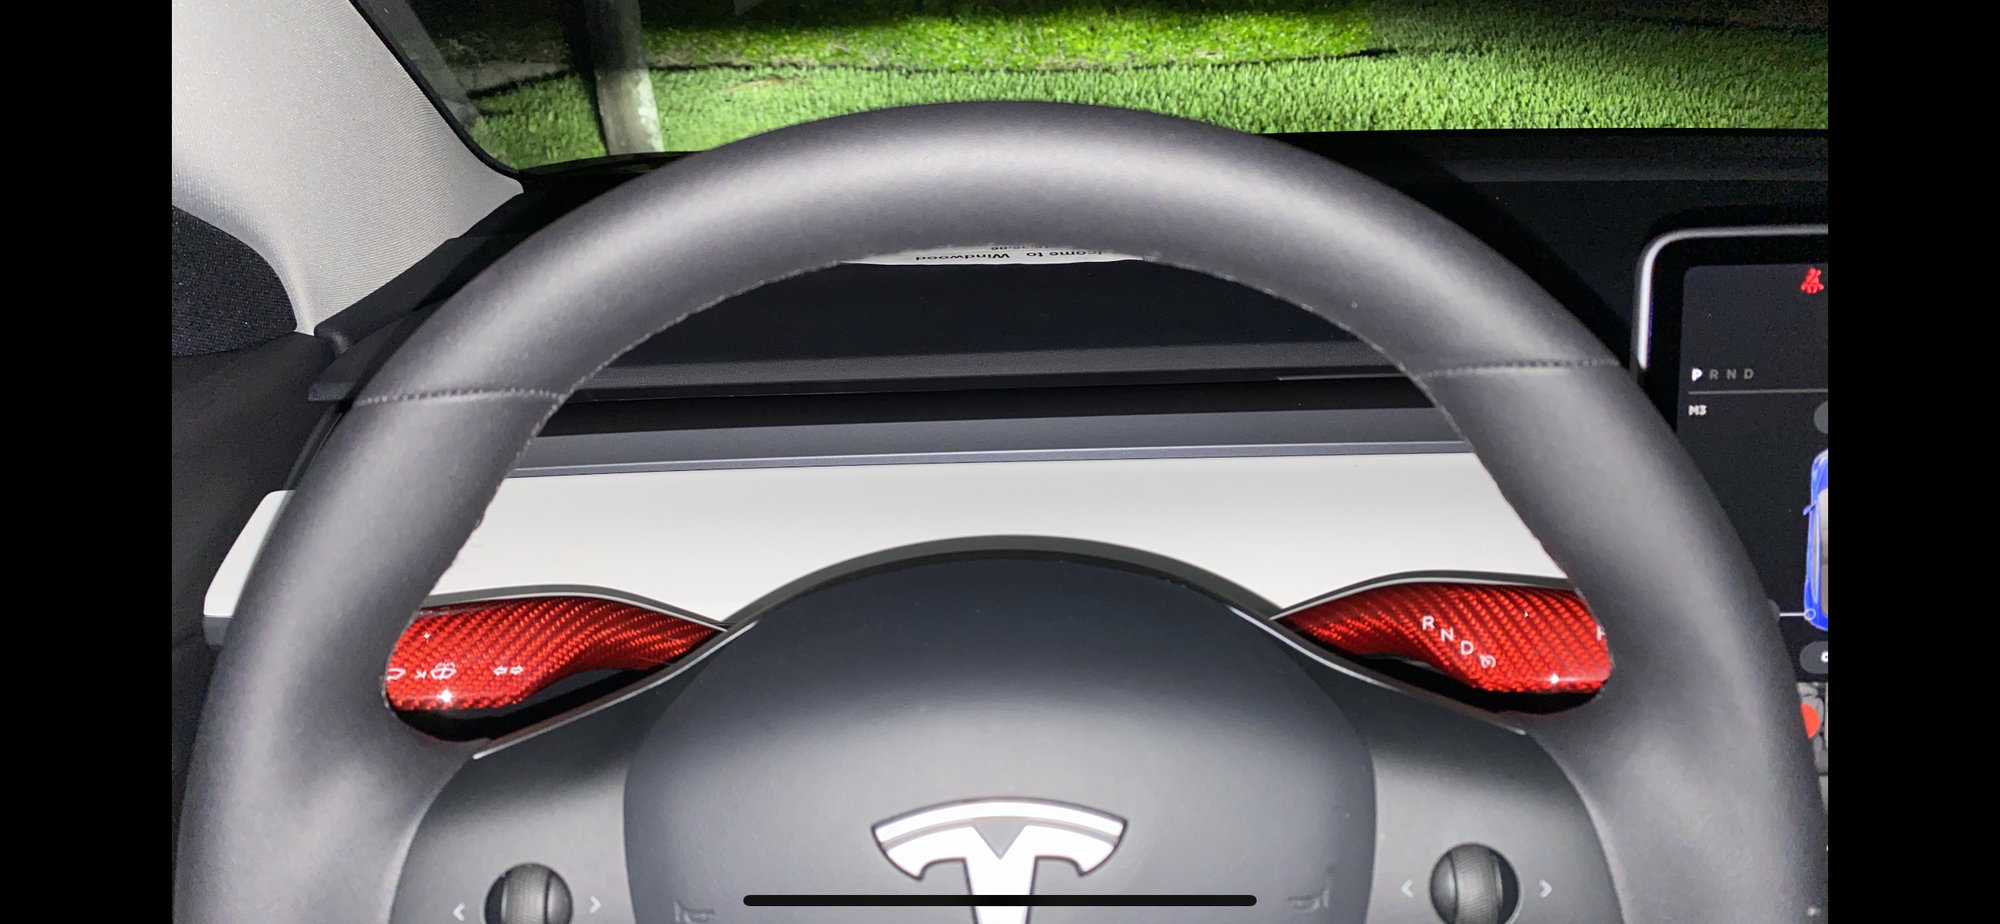 RPM Tesla Red Carbon Fiber Stalk Covers copy.jpg